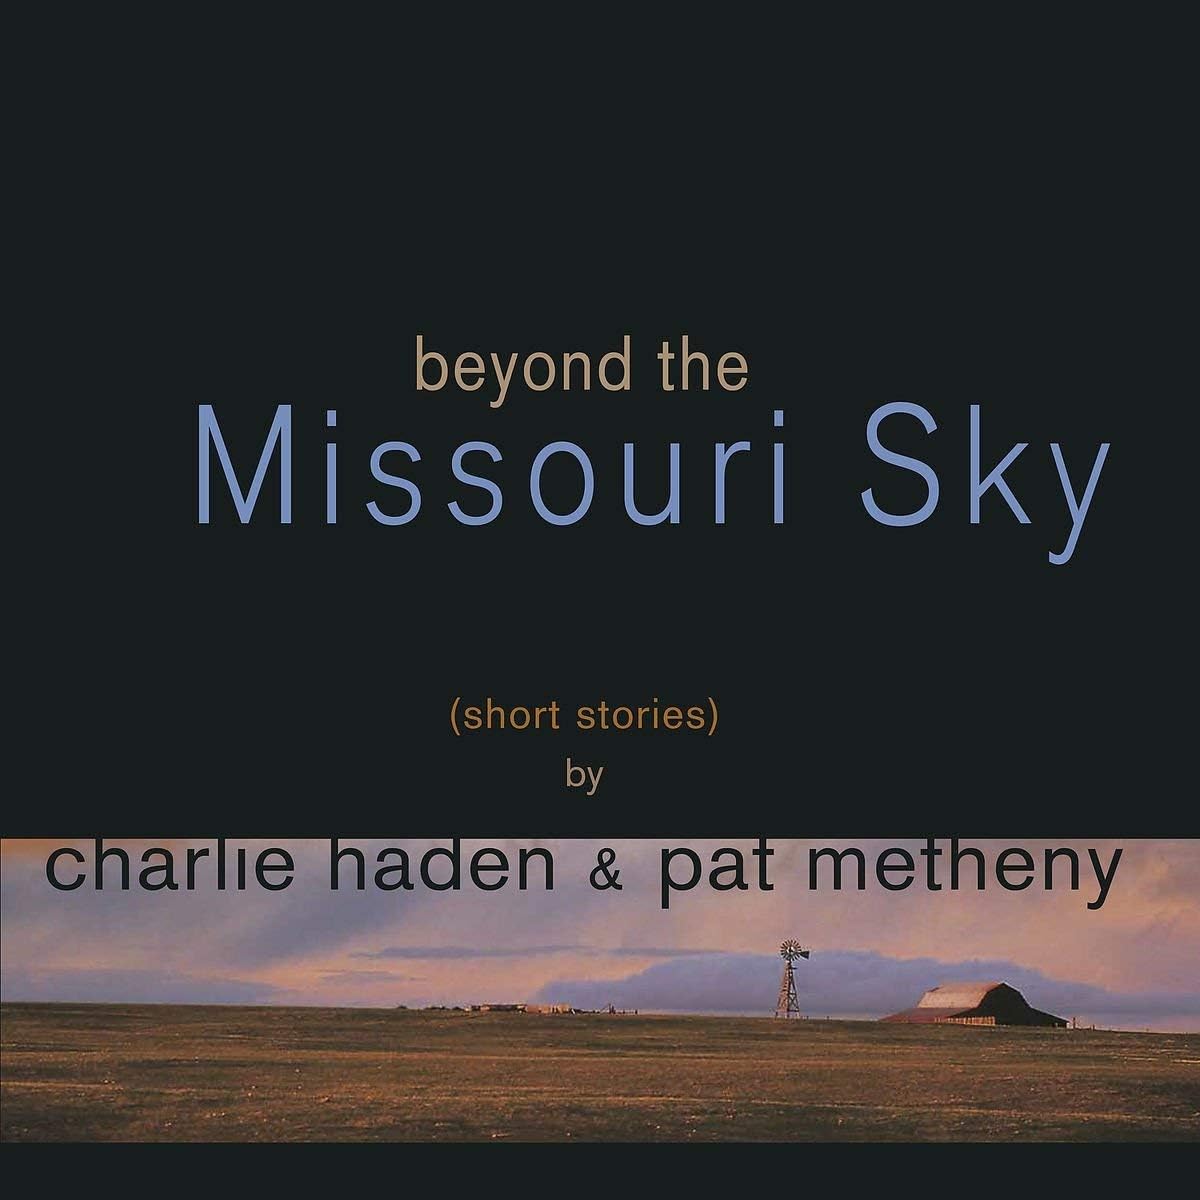 Pat Metheny/Charlie Haden - Beyond the Missouri Sky (Vinile 180gr.)